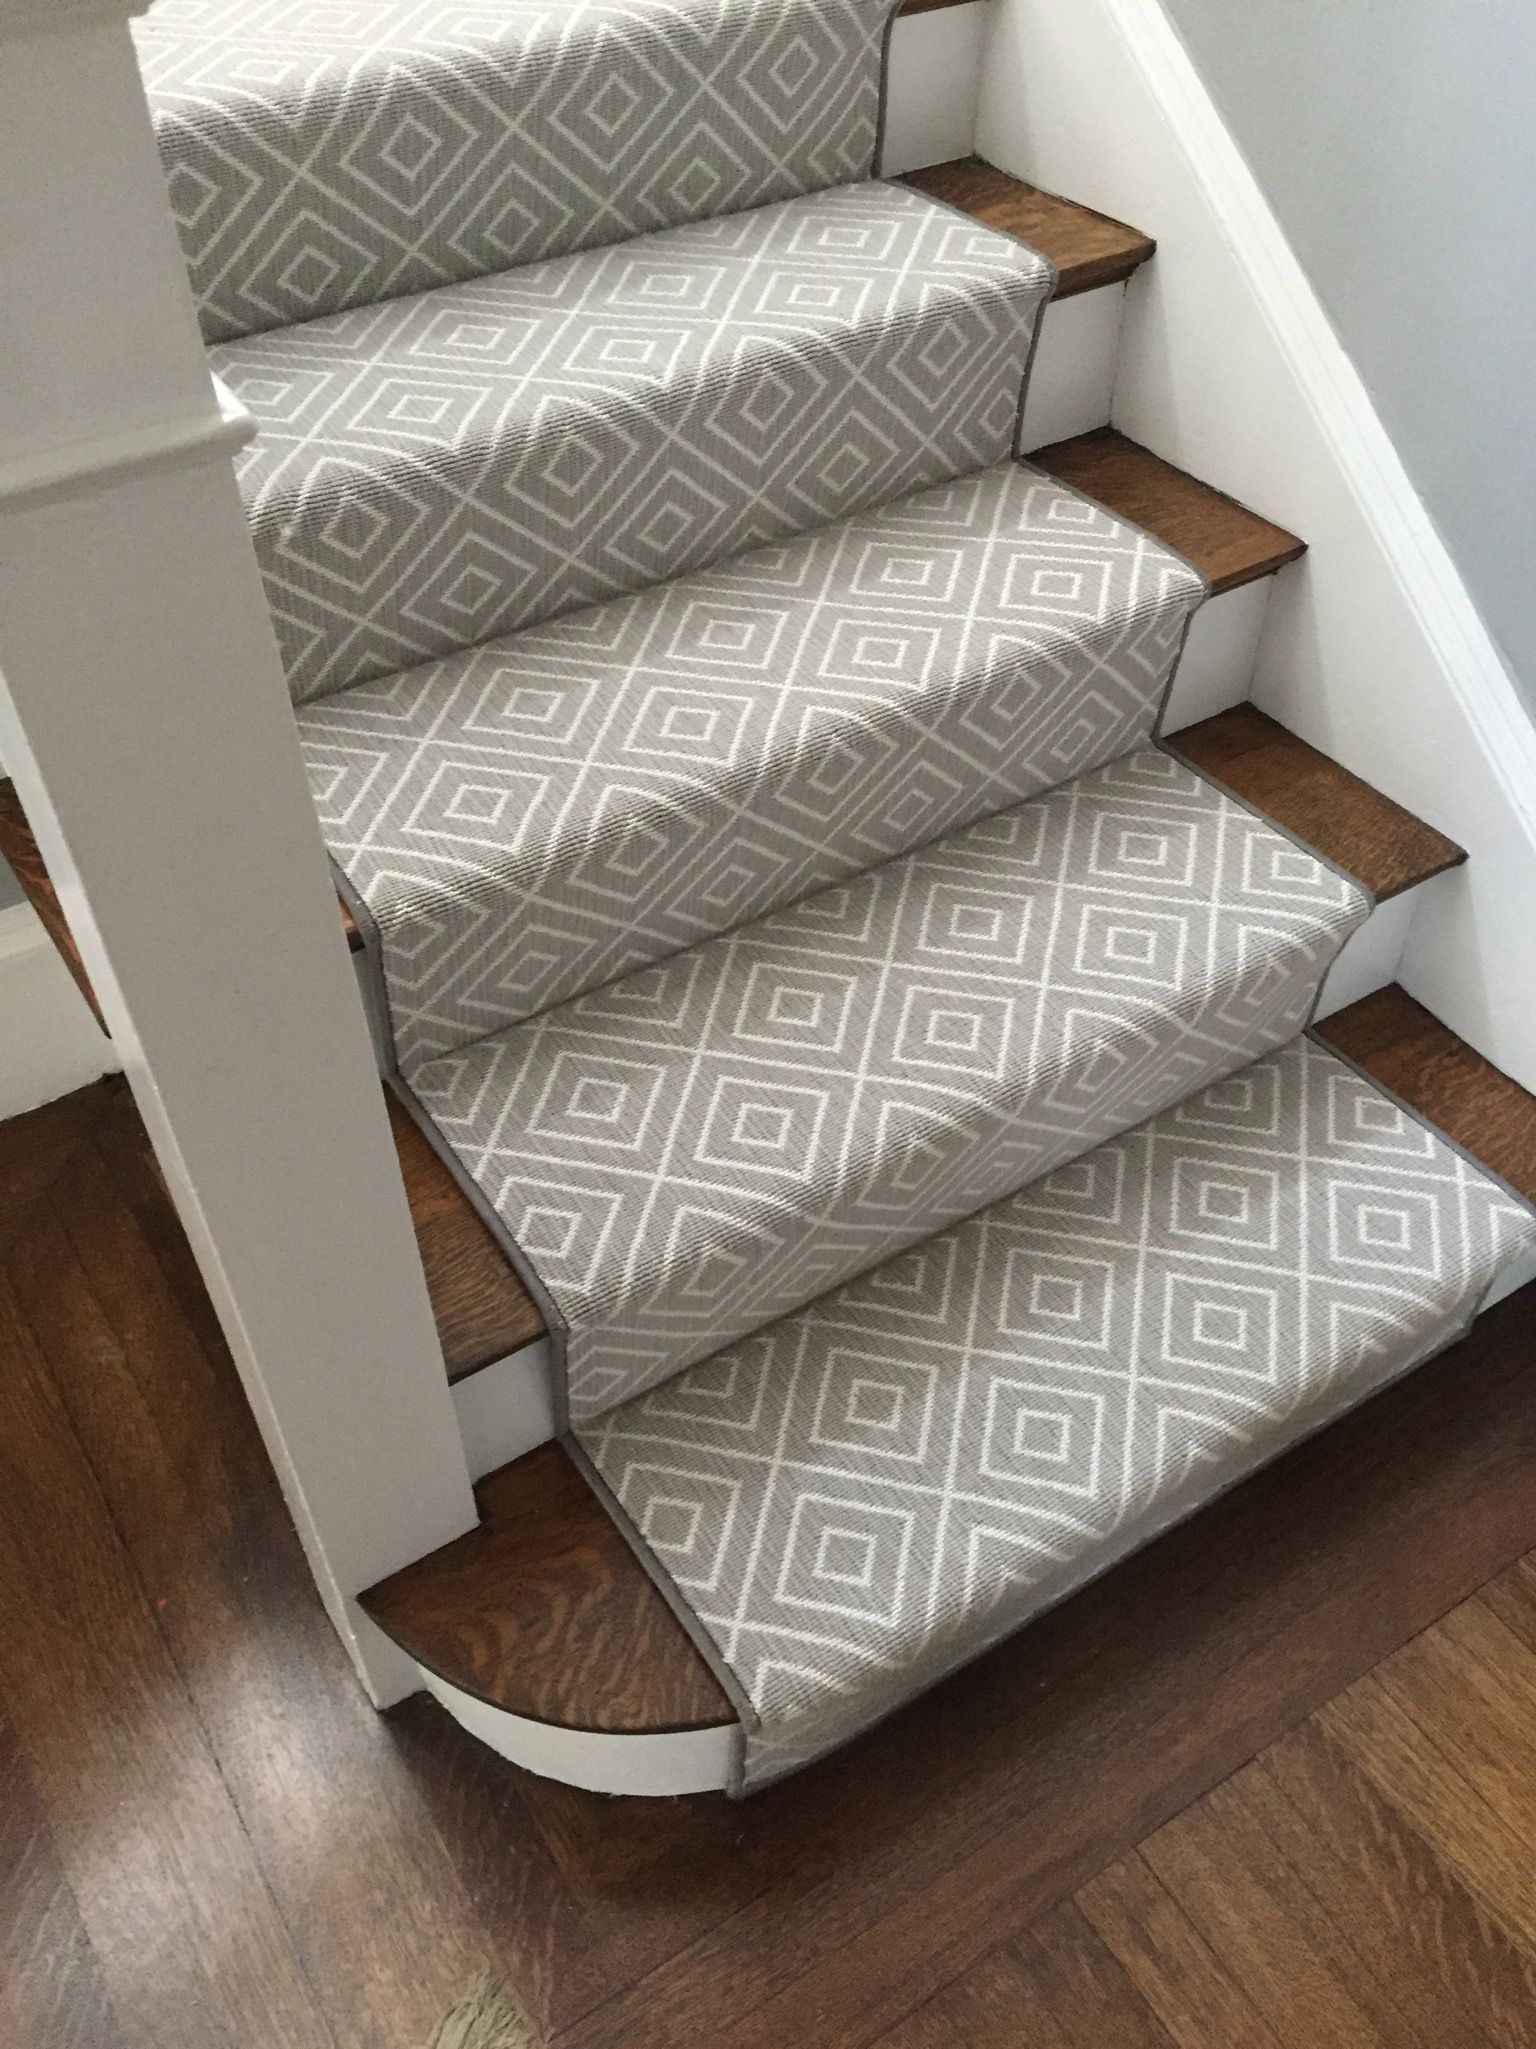 Stair Carpet Runners - The Carpet Workroom